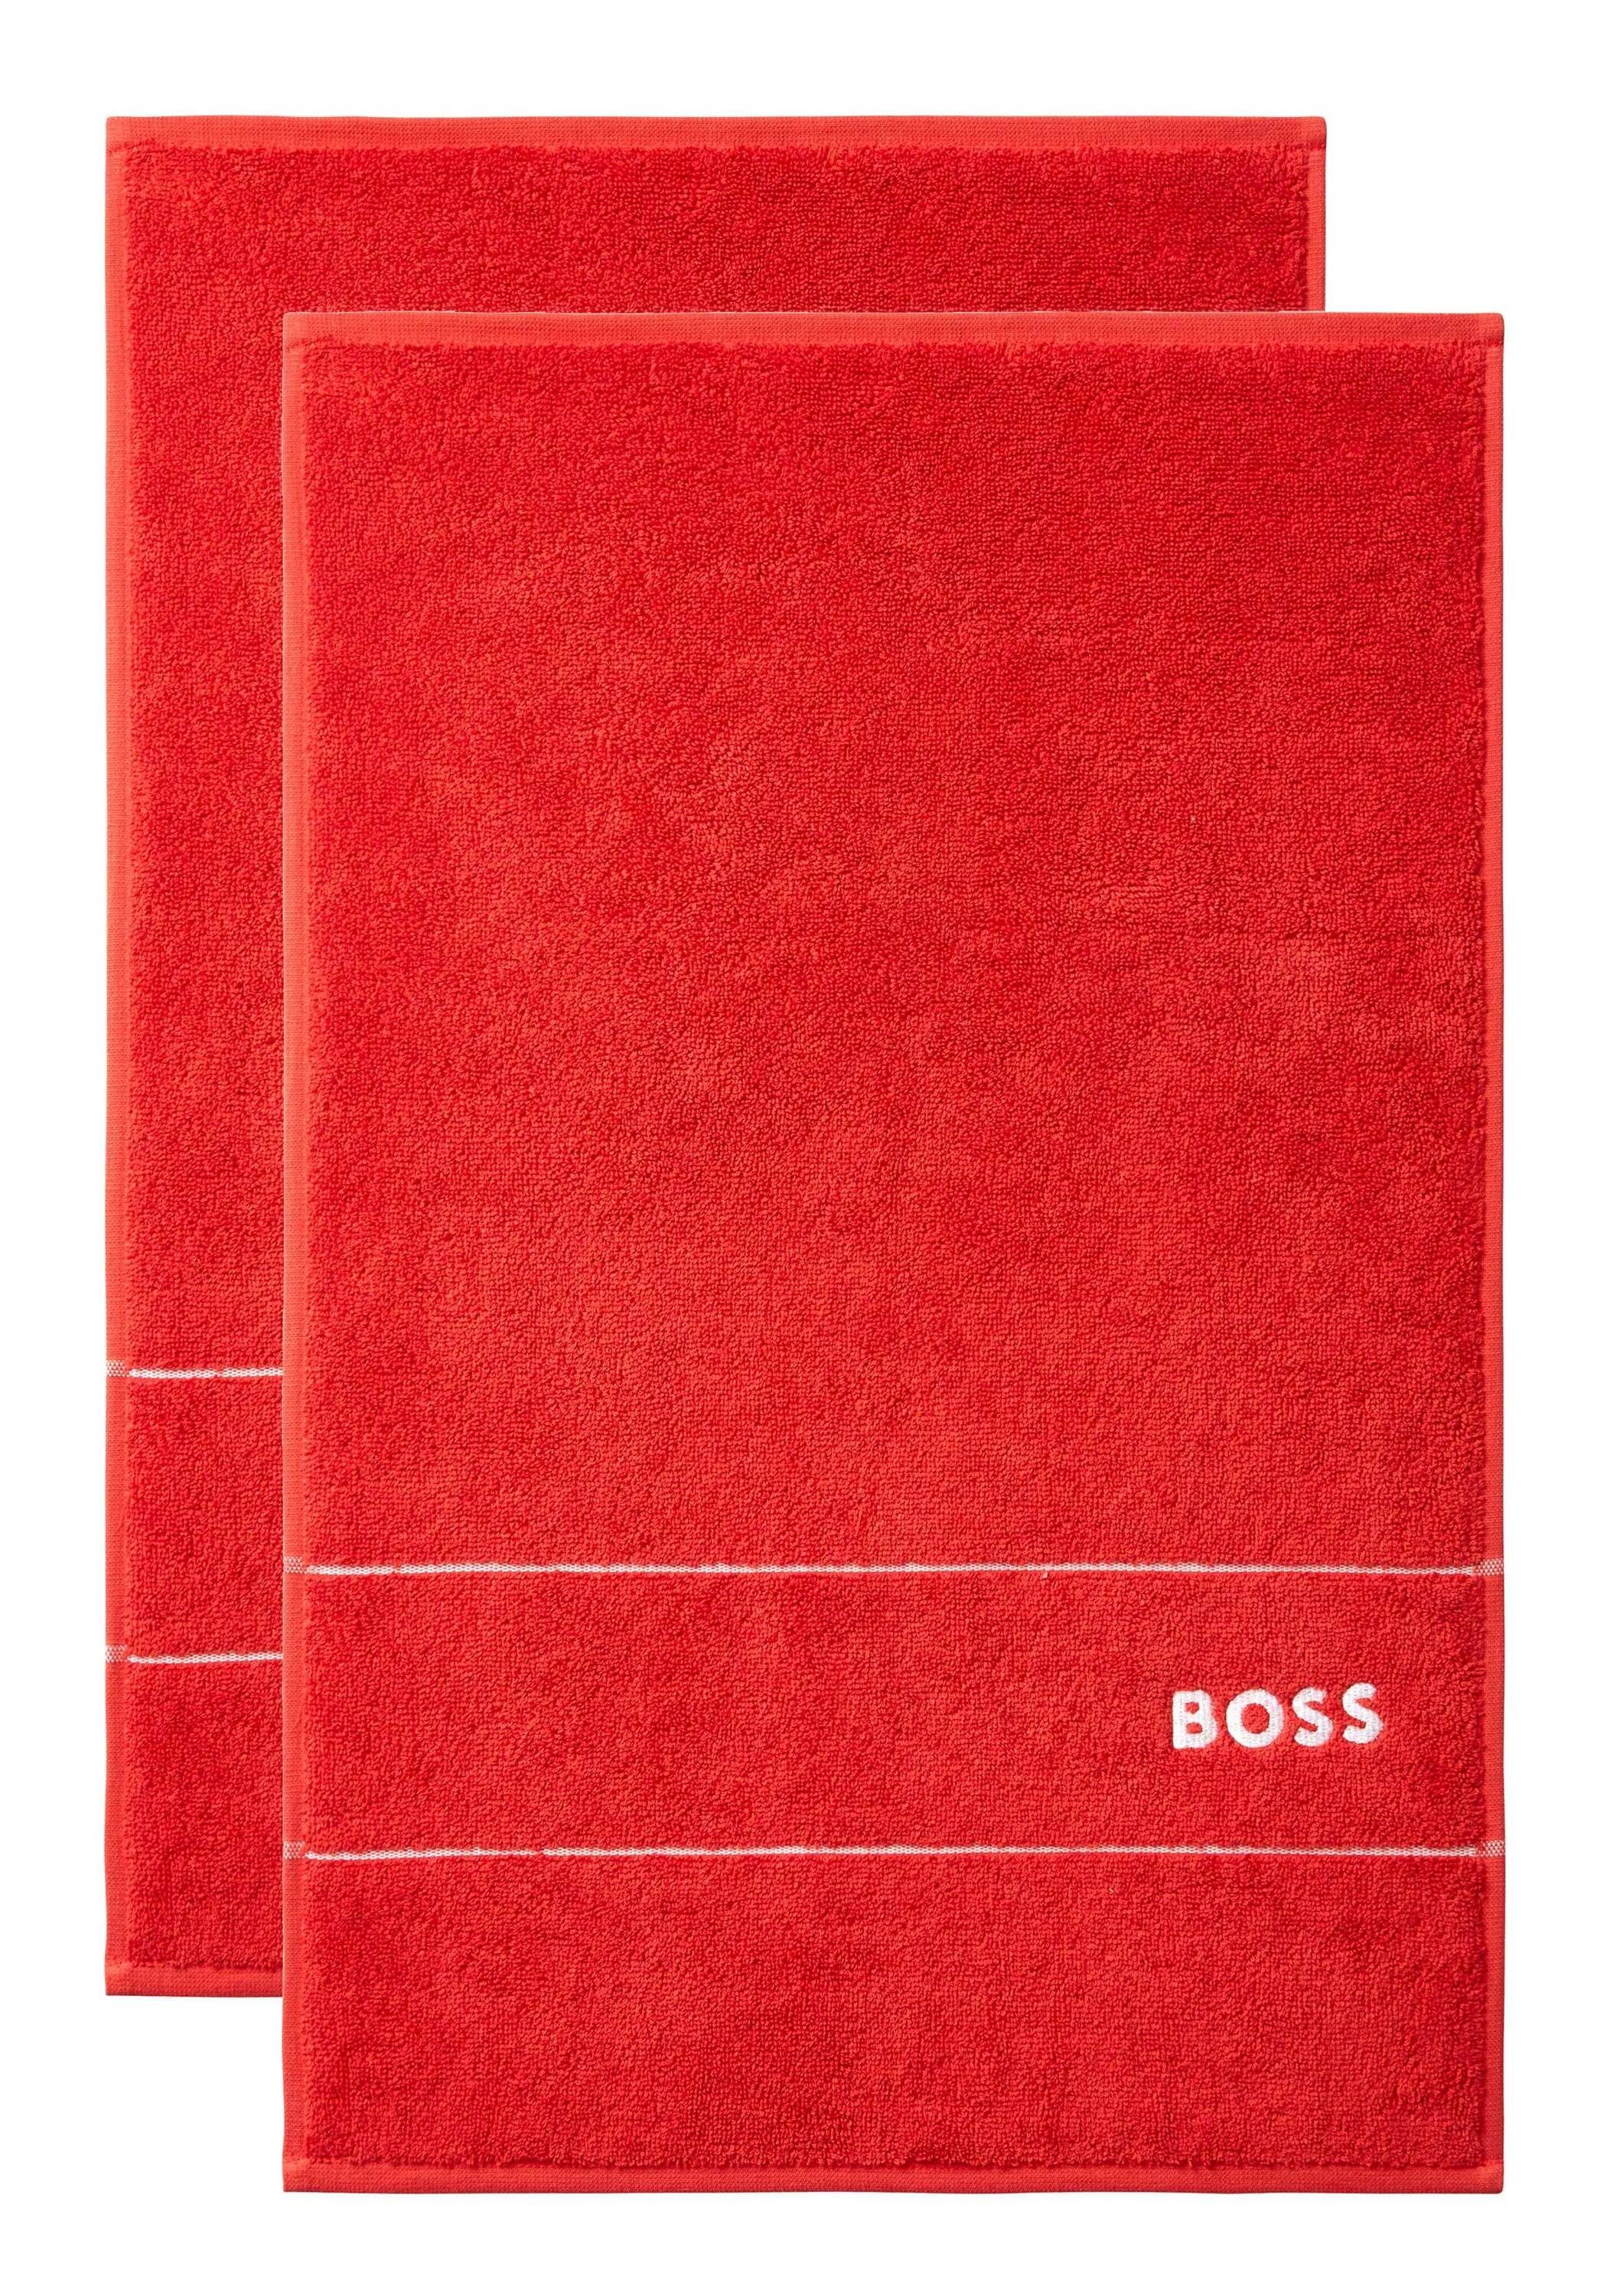 Hugo Boss Home Gästehandtücher PLAIN (2tlg), 100% Baumwolle, mit modernem Design REDN